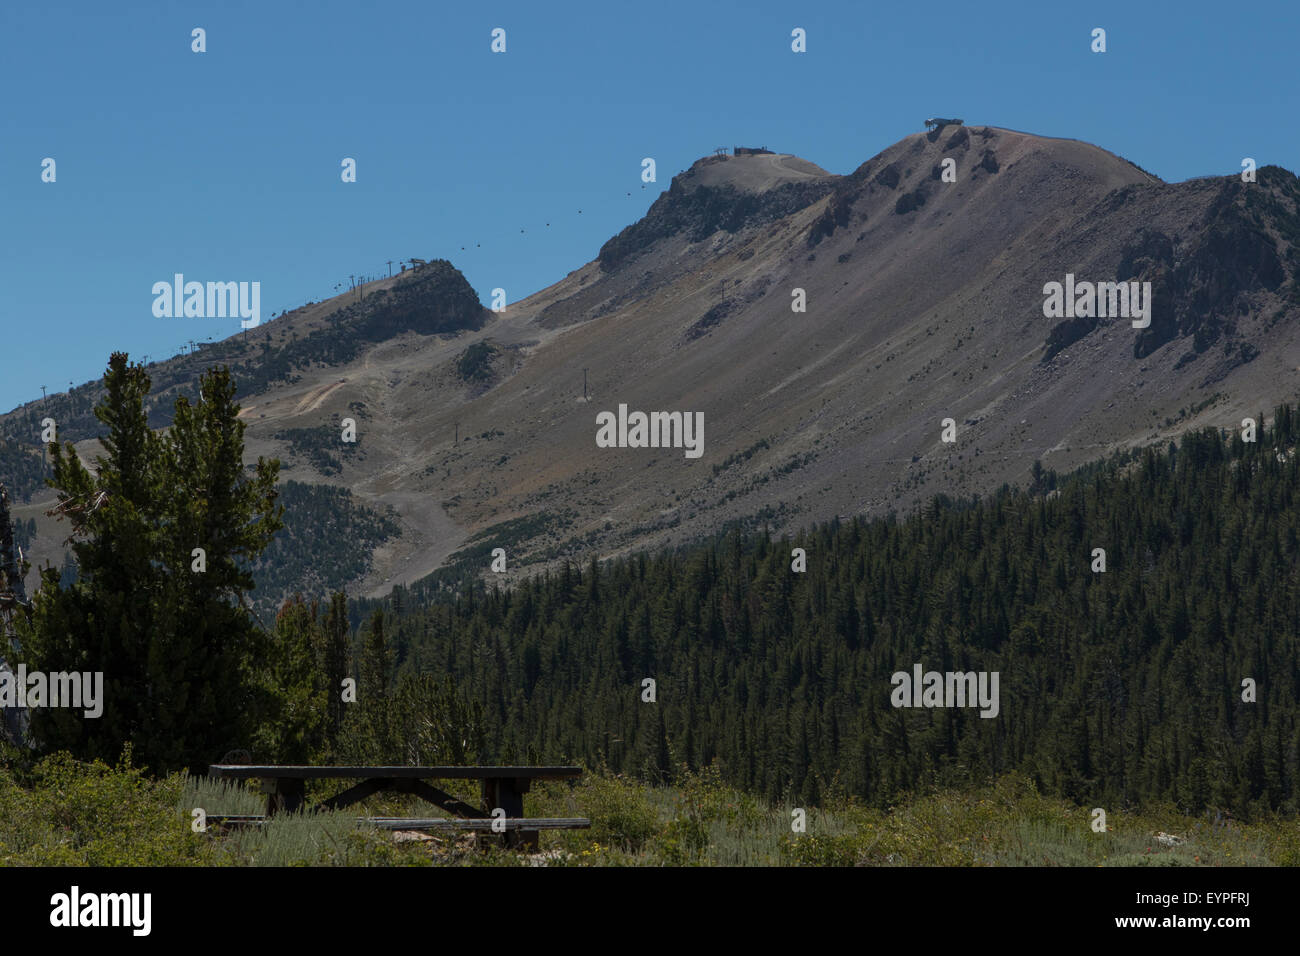 Mammoth mountain ski resort in the summer of 2015 Stock Photo